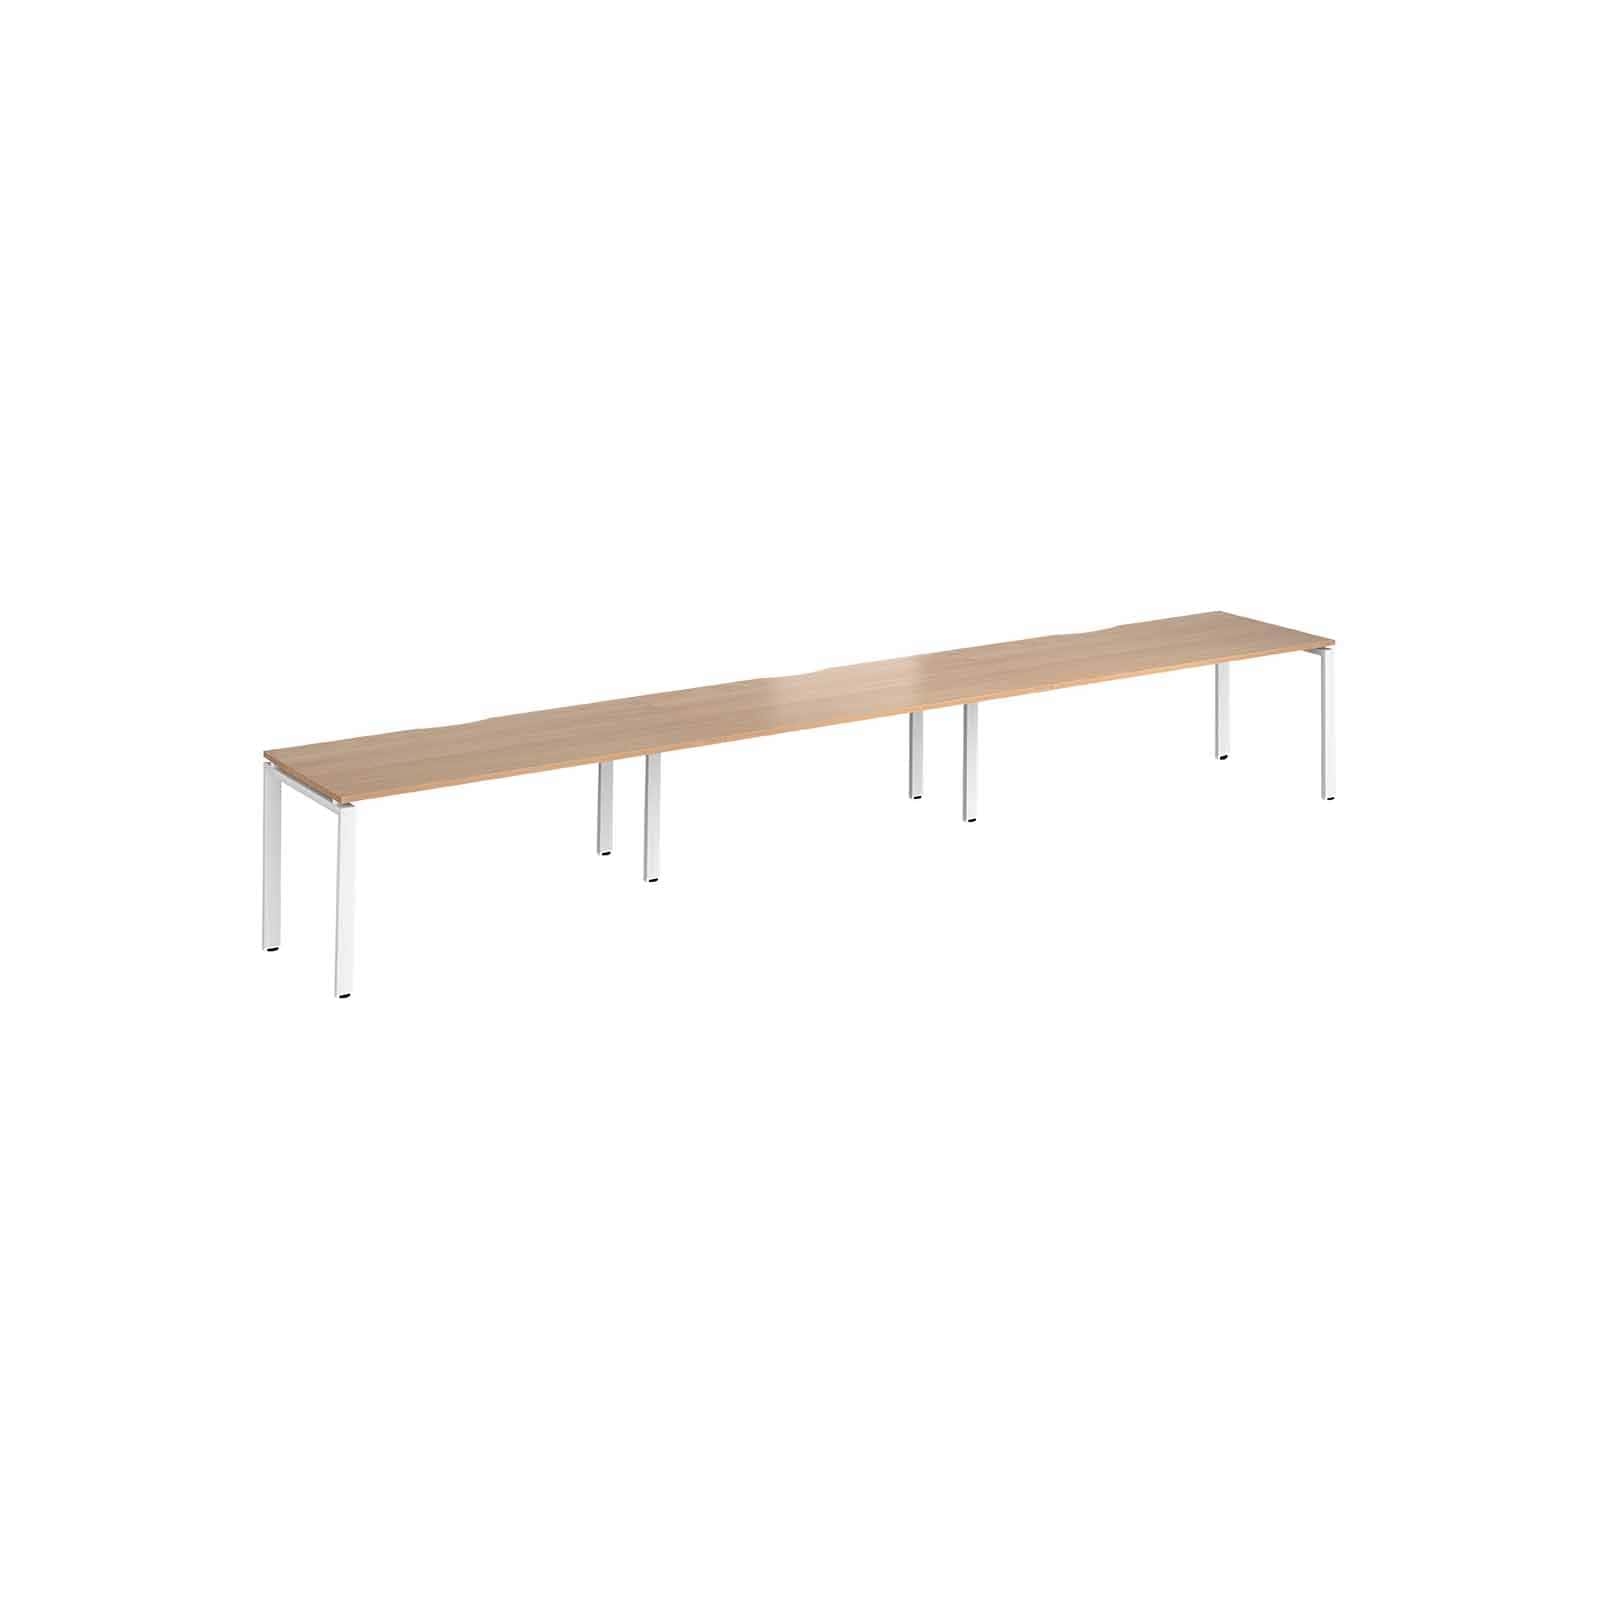 3 Person Single Row Bench Desk W1000mm x D600mm x H740mm